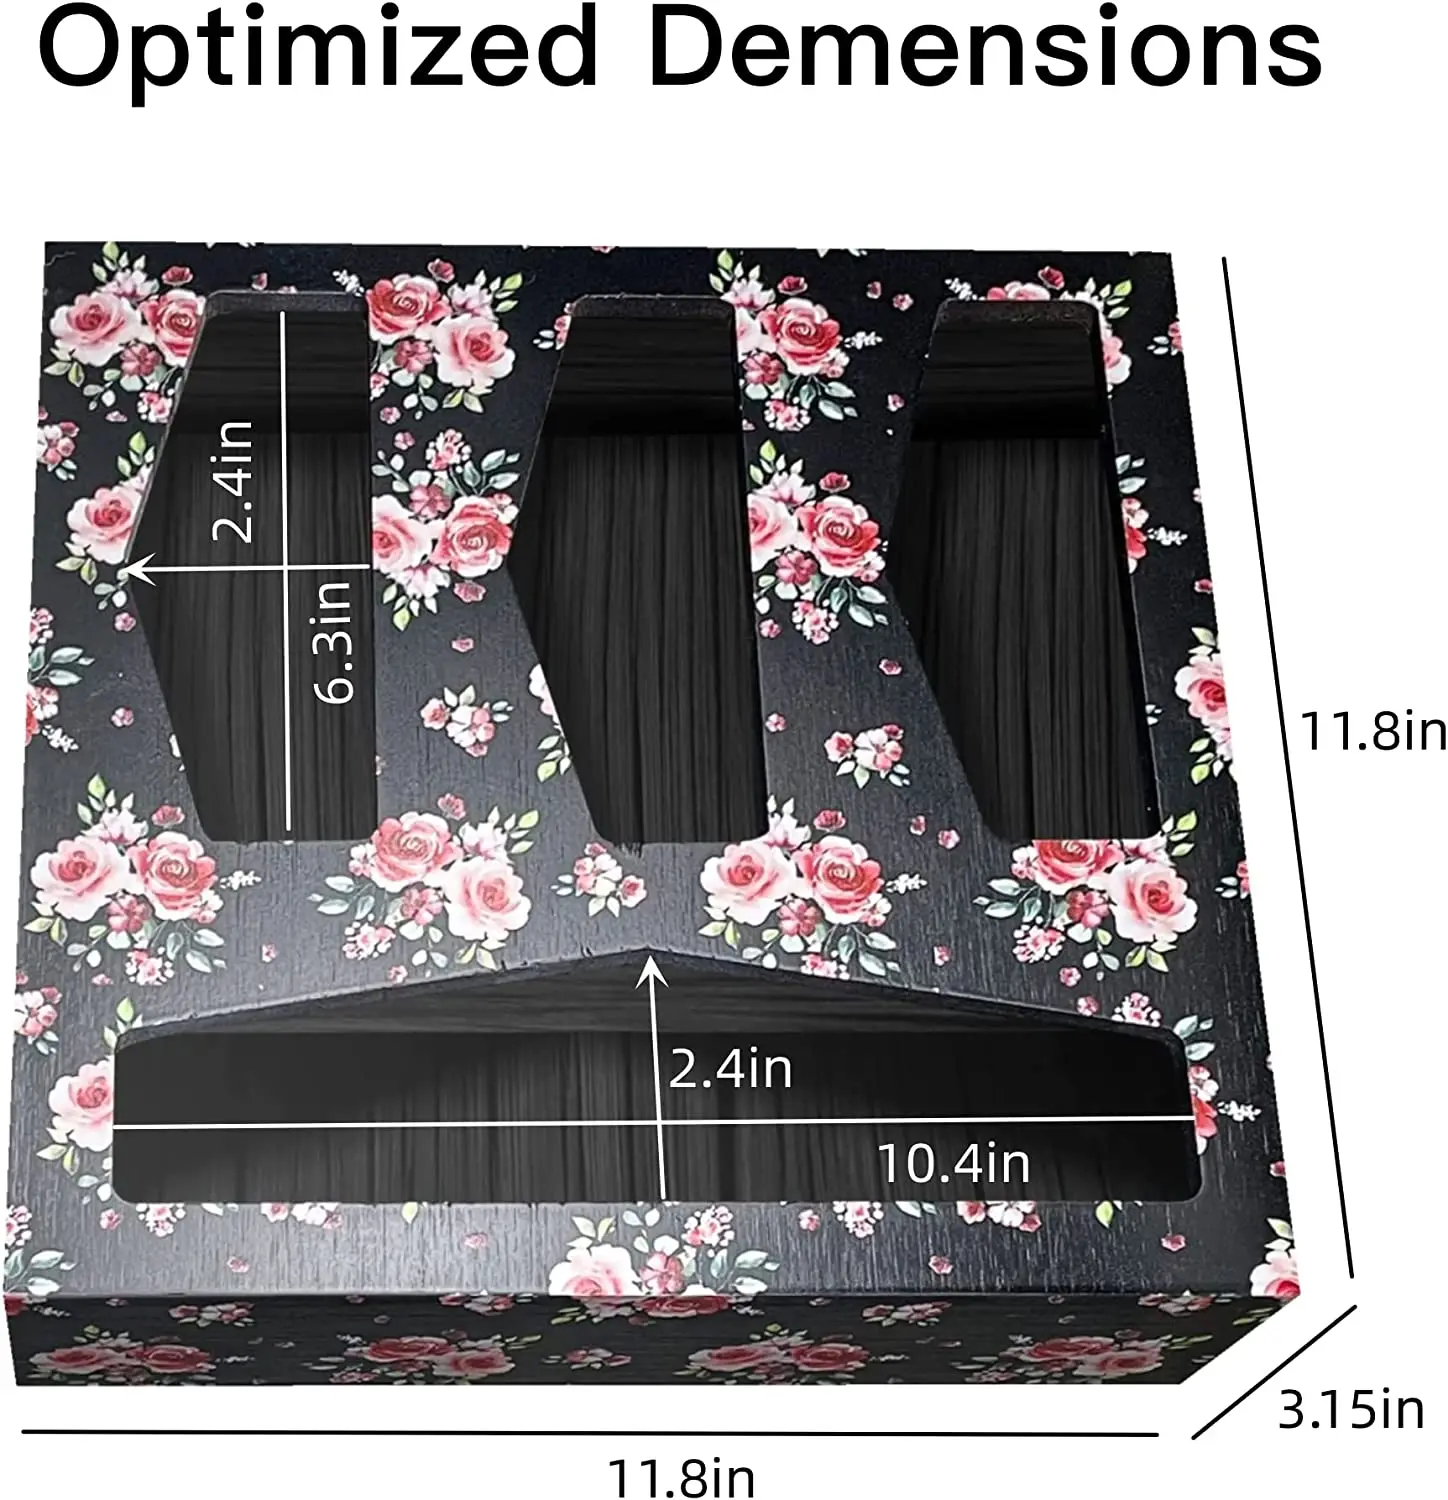 Bamboo Wood Colorful UV Print Black Flower Supplier Ziplock Bag Storage Organizer for Kitchen